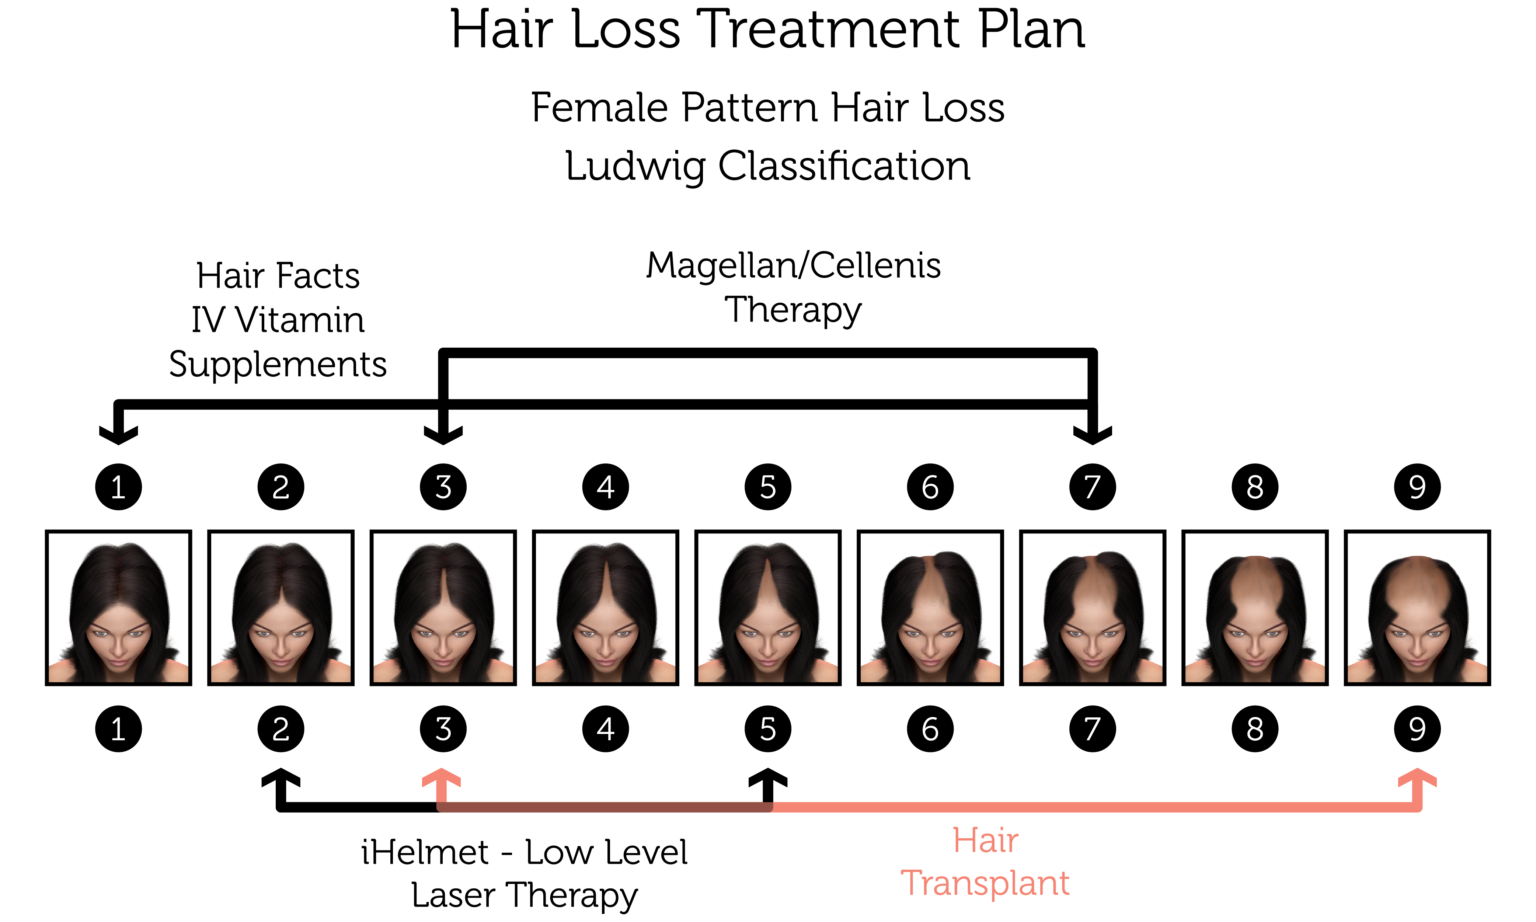 Female Pattern Hair Loss Treatment Rejuvence Clinic 6929